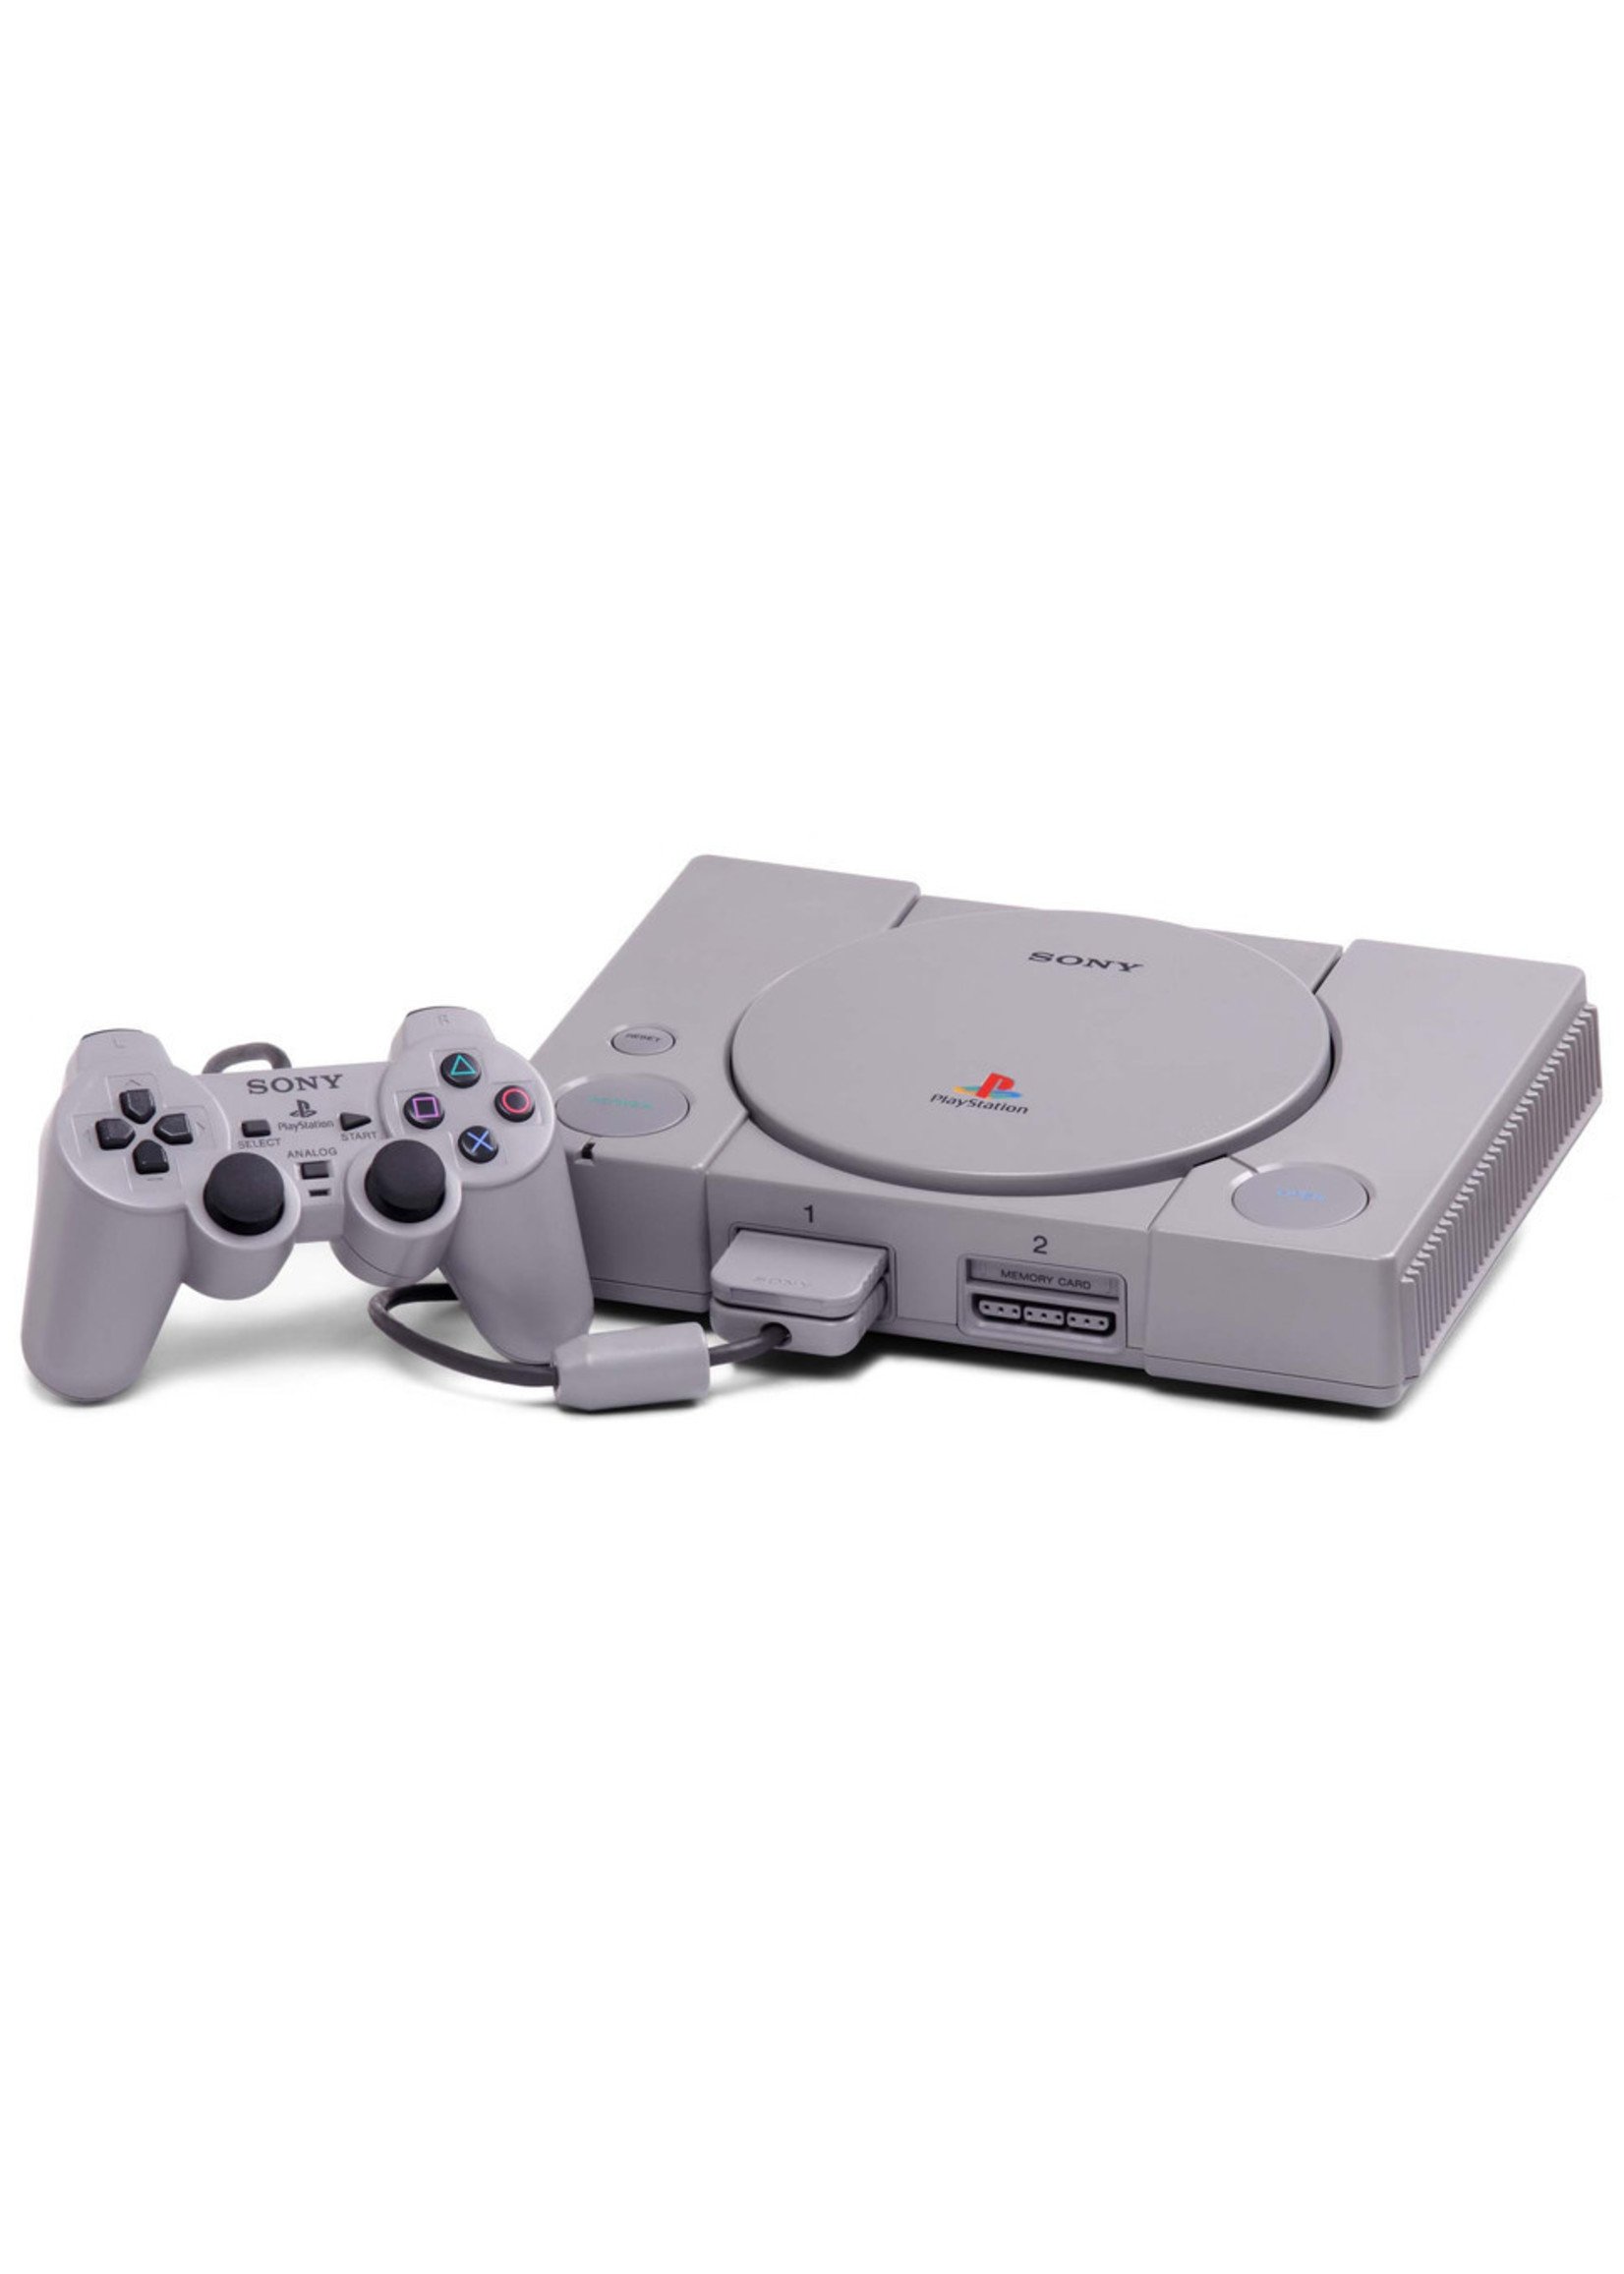 Sony Playstation 1 (PS1) Sony PlayStation (PS1) Console - Fat